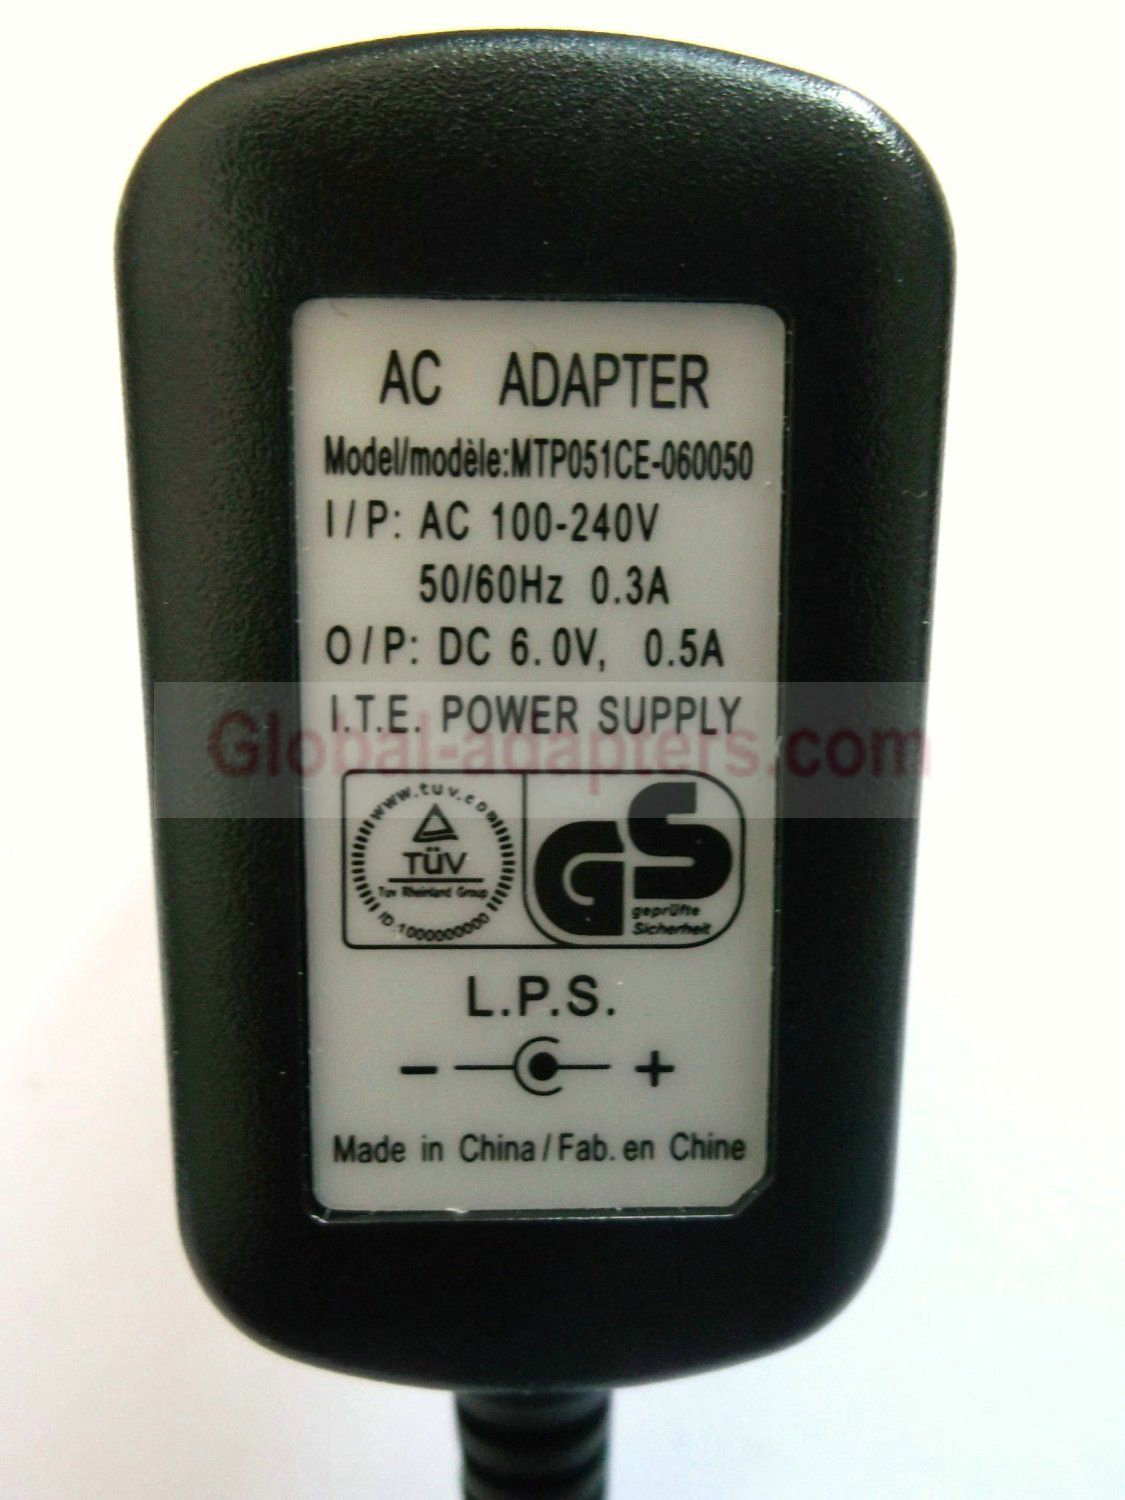 NEW 6V 0.5A MTP051CE-060050 POWER SUPPLY AC ADAPTER EU